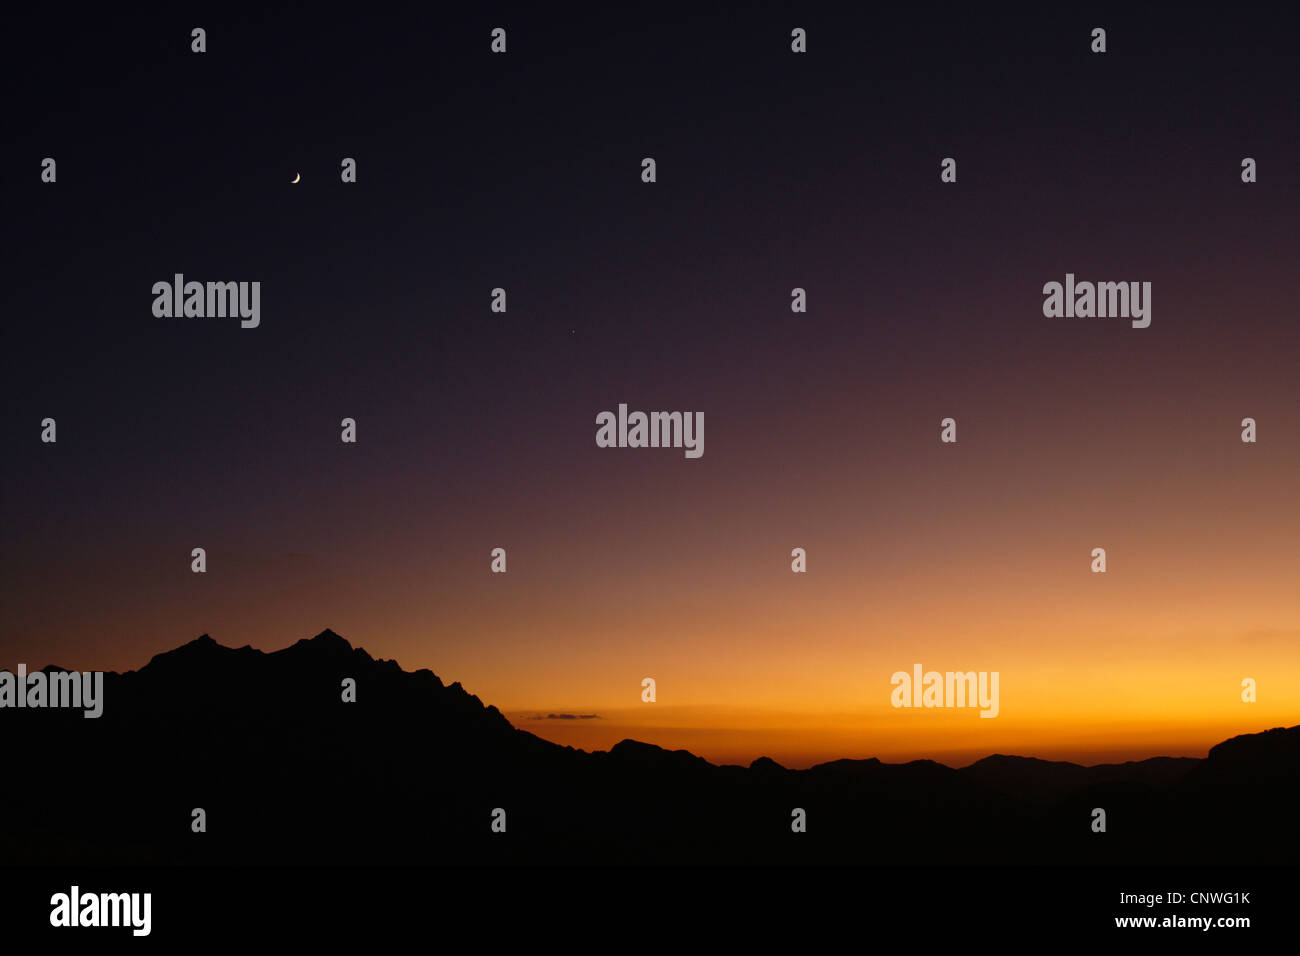 Abend-Silhouette des Mount Catherine gesehen vom Berg Sinai, Ägypten, Sinai Stockfoto